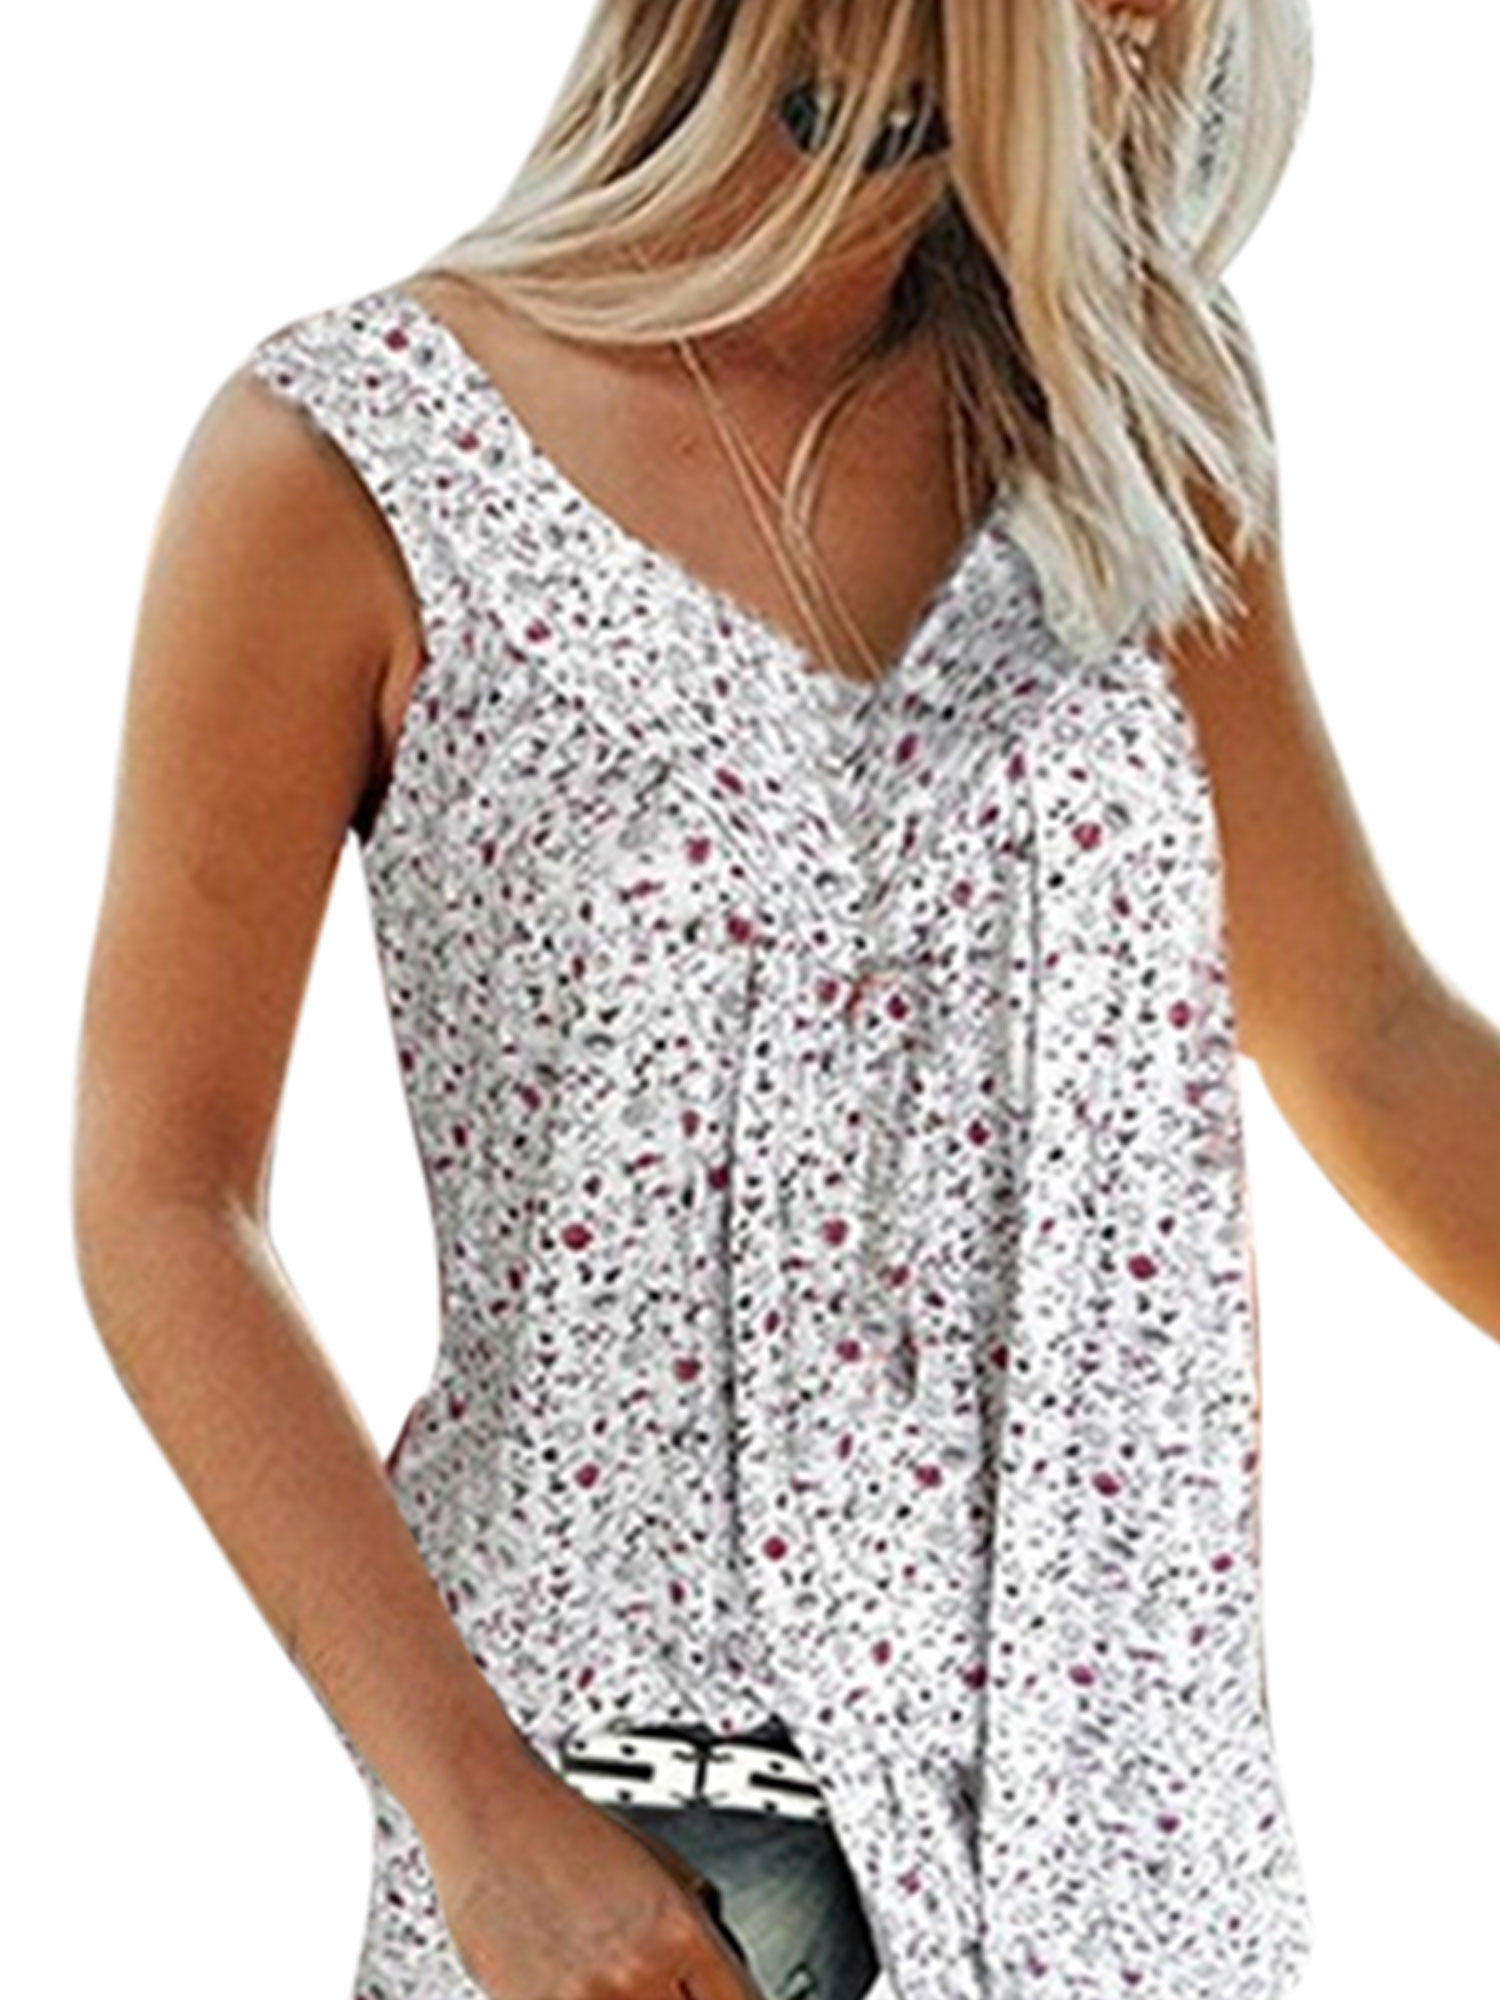 Us Women Floral Summer Loose Sleeveless Tank Vest Boho Baggy Top Shirt Plus Size Ebay 